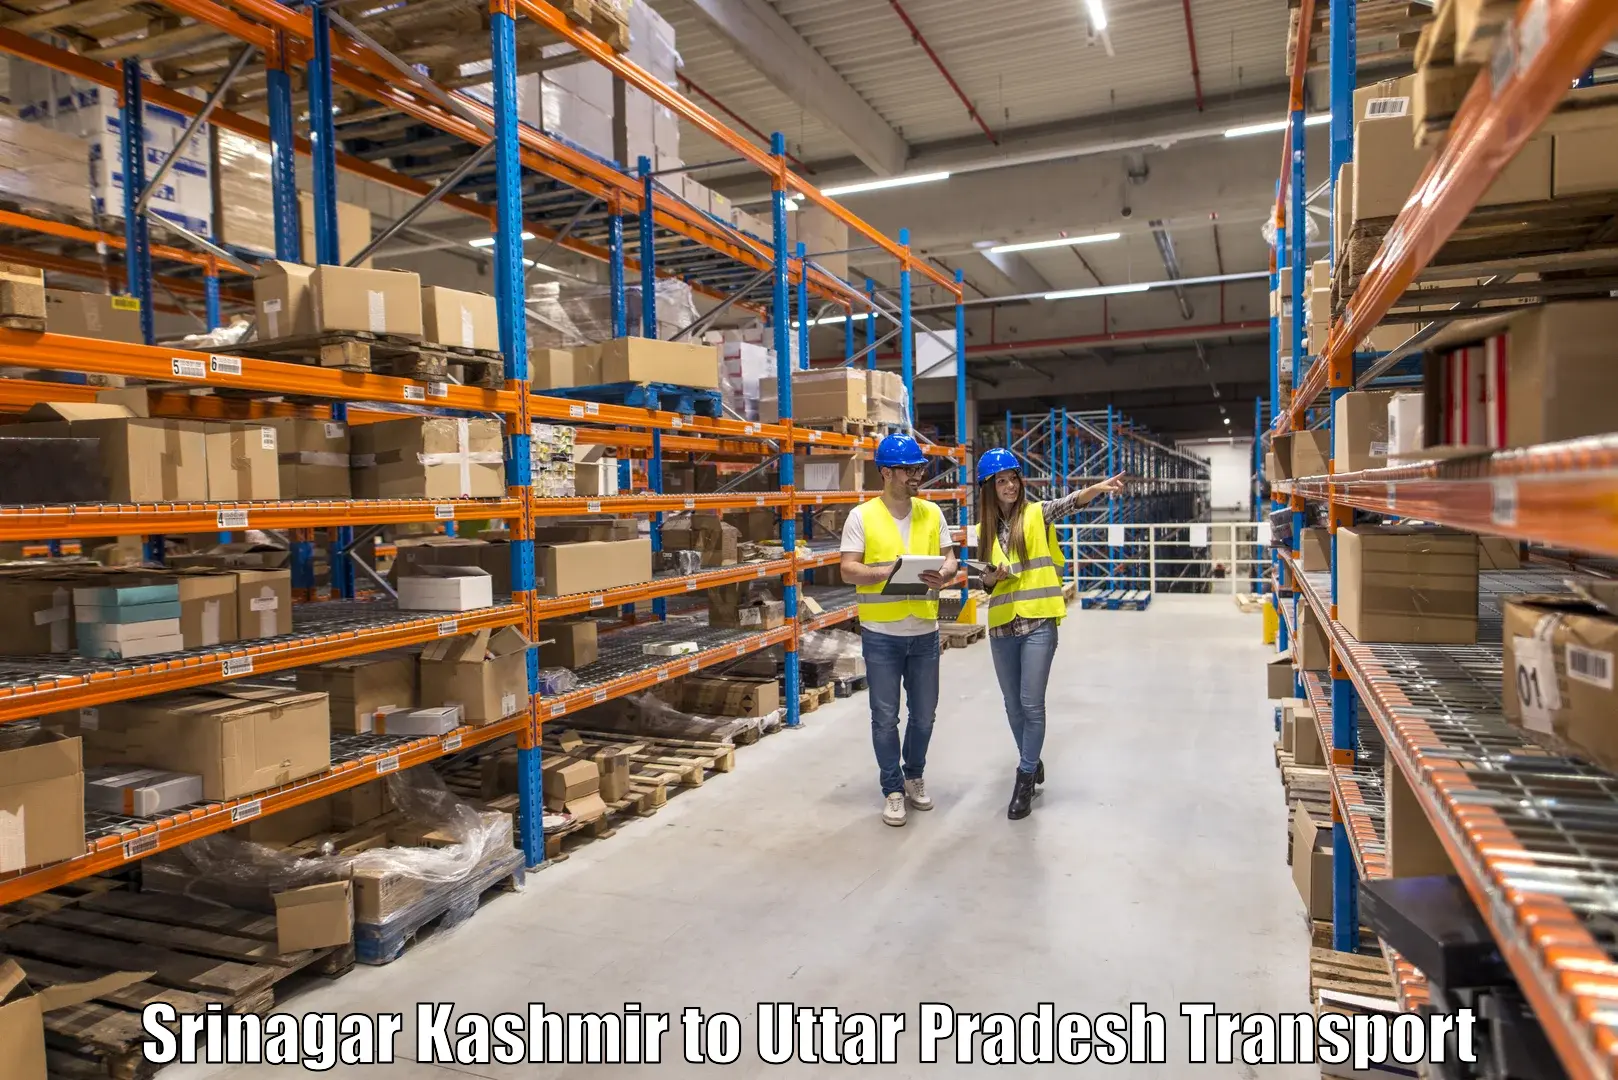 Goods delivery service Srinagar Kashmir to Hamirpur Uttar Pradesh